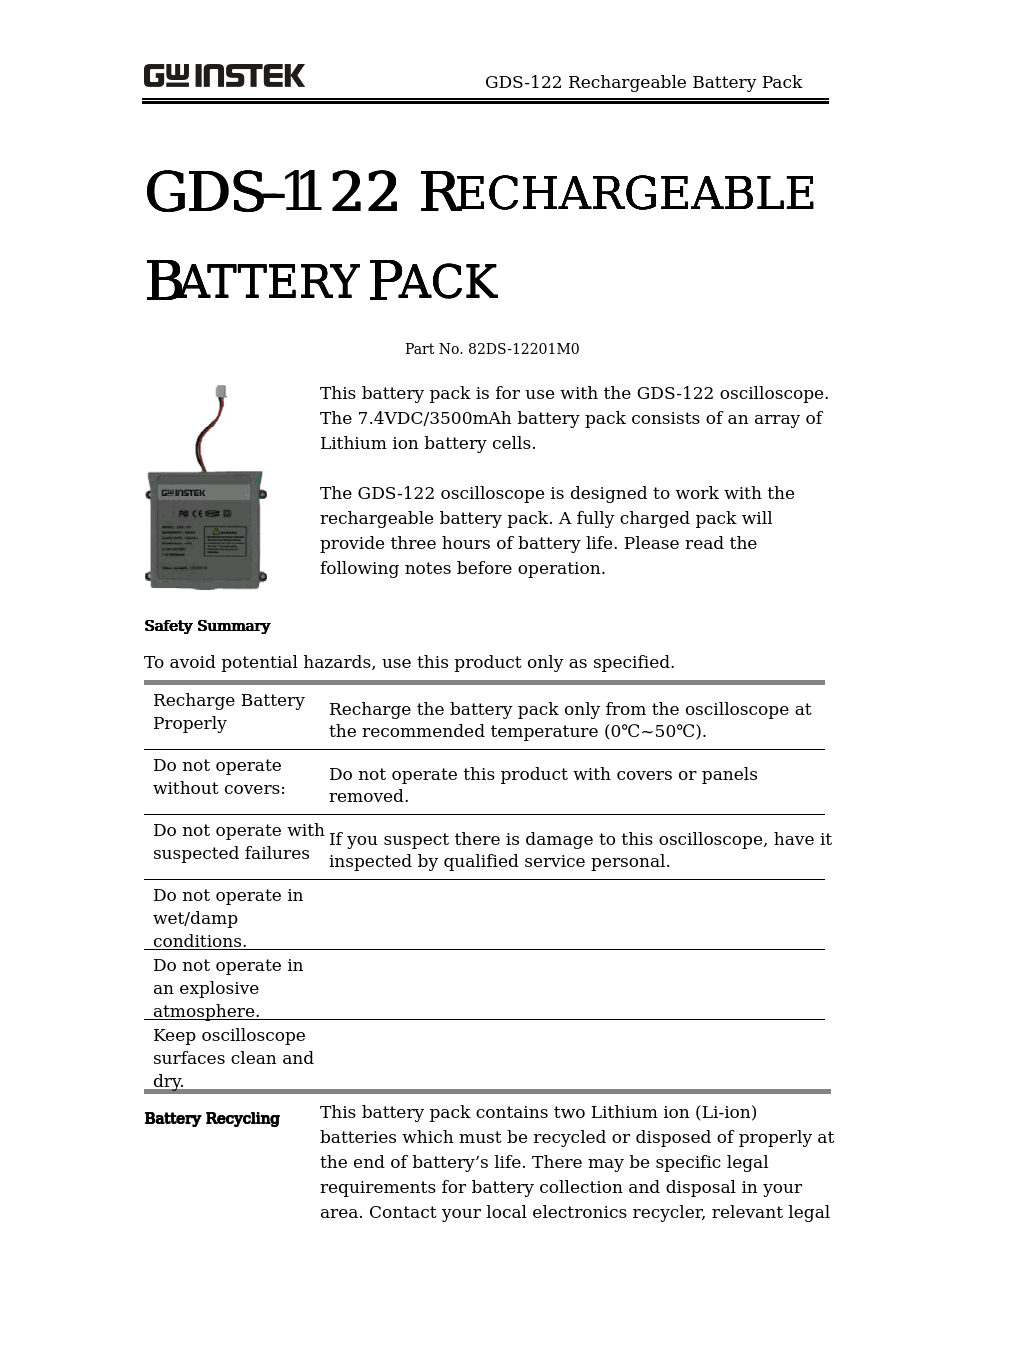 GDS-122 Installation Guide